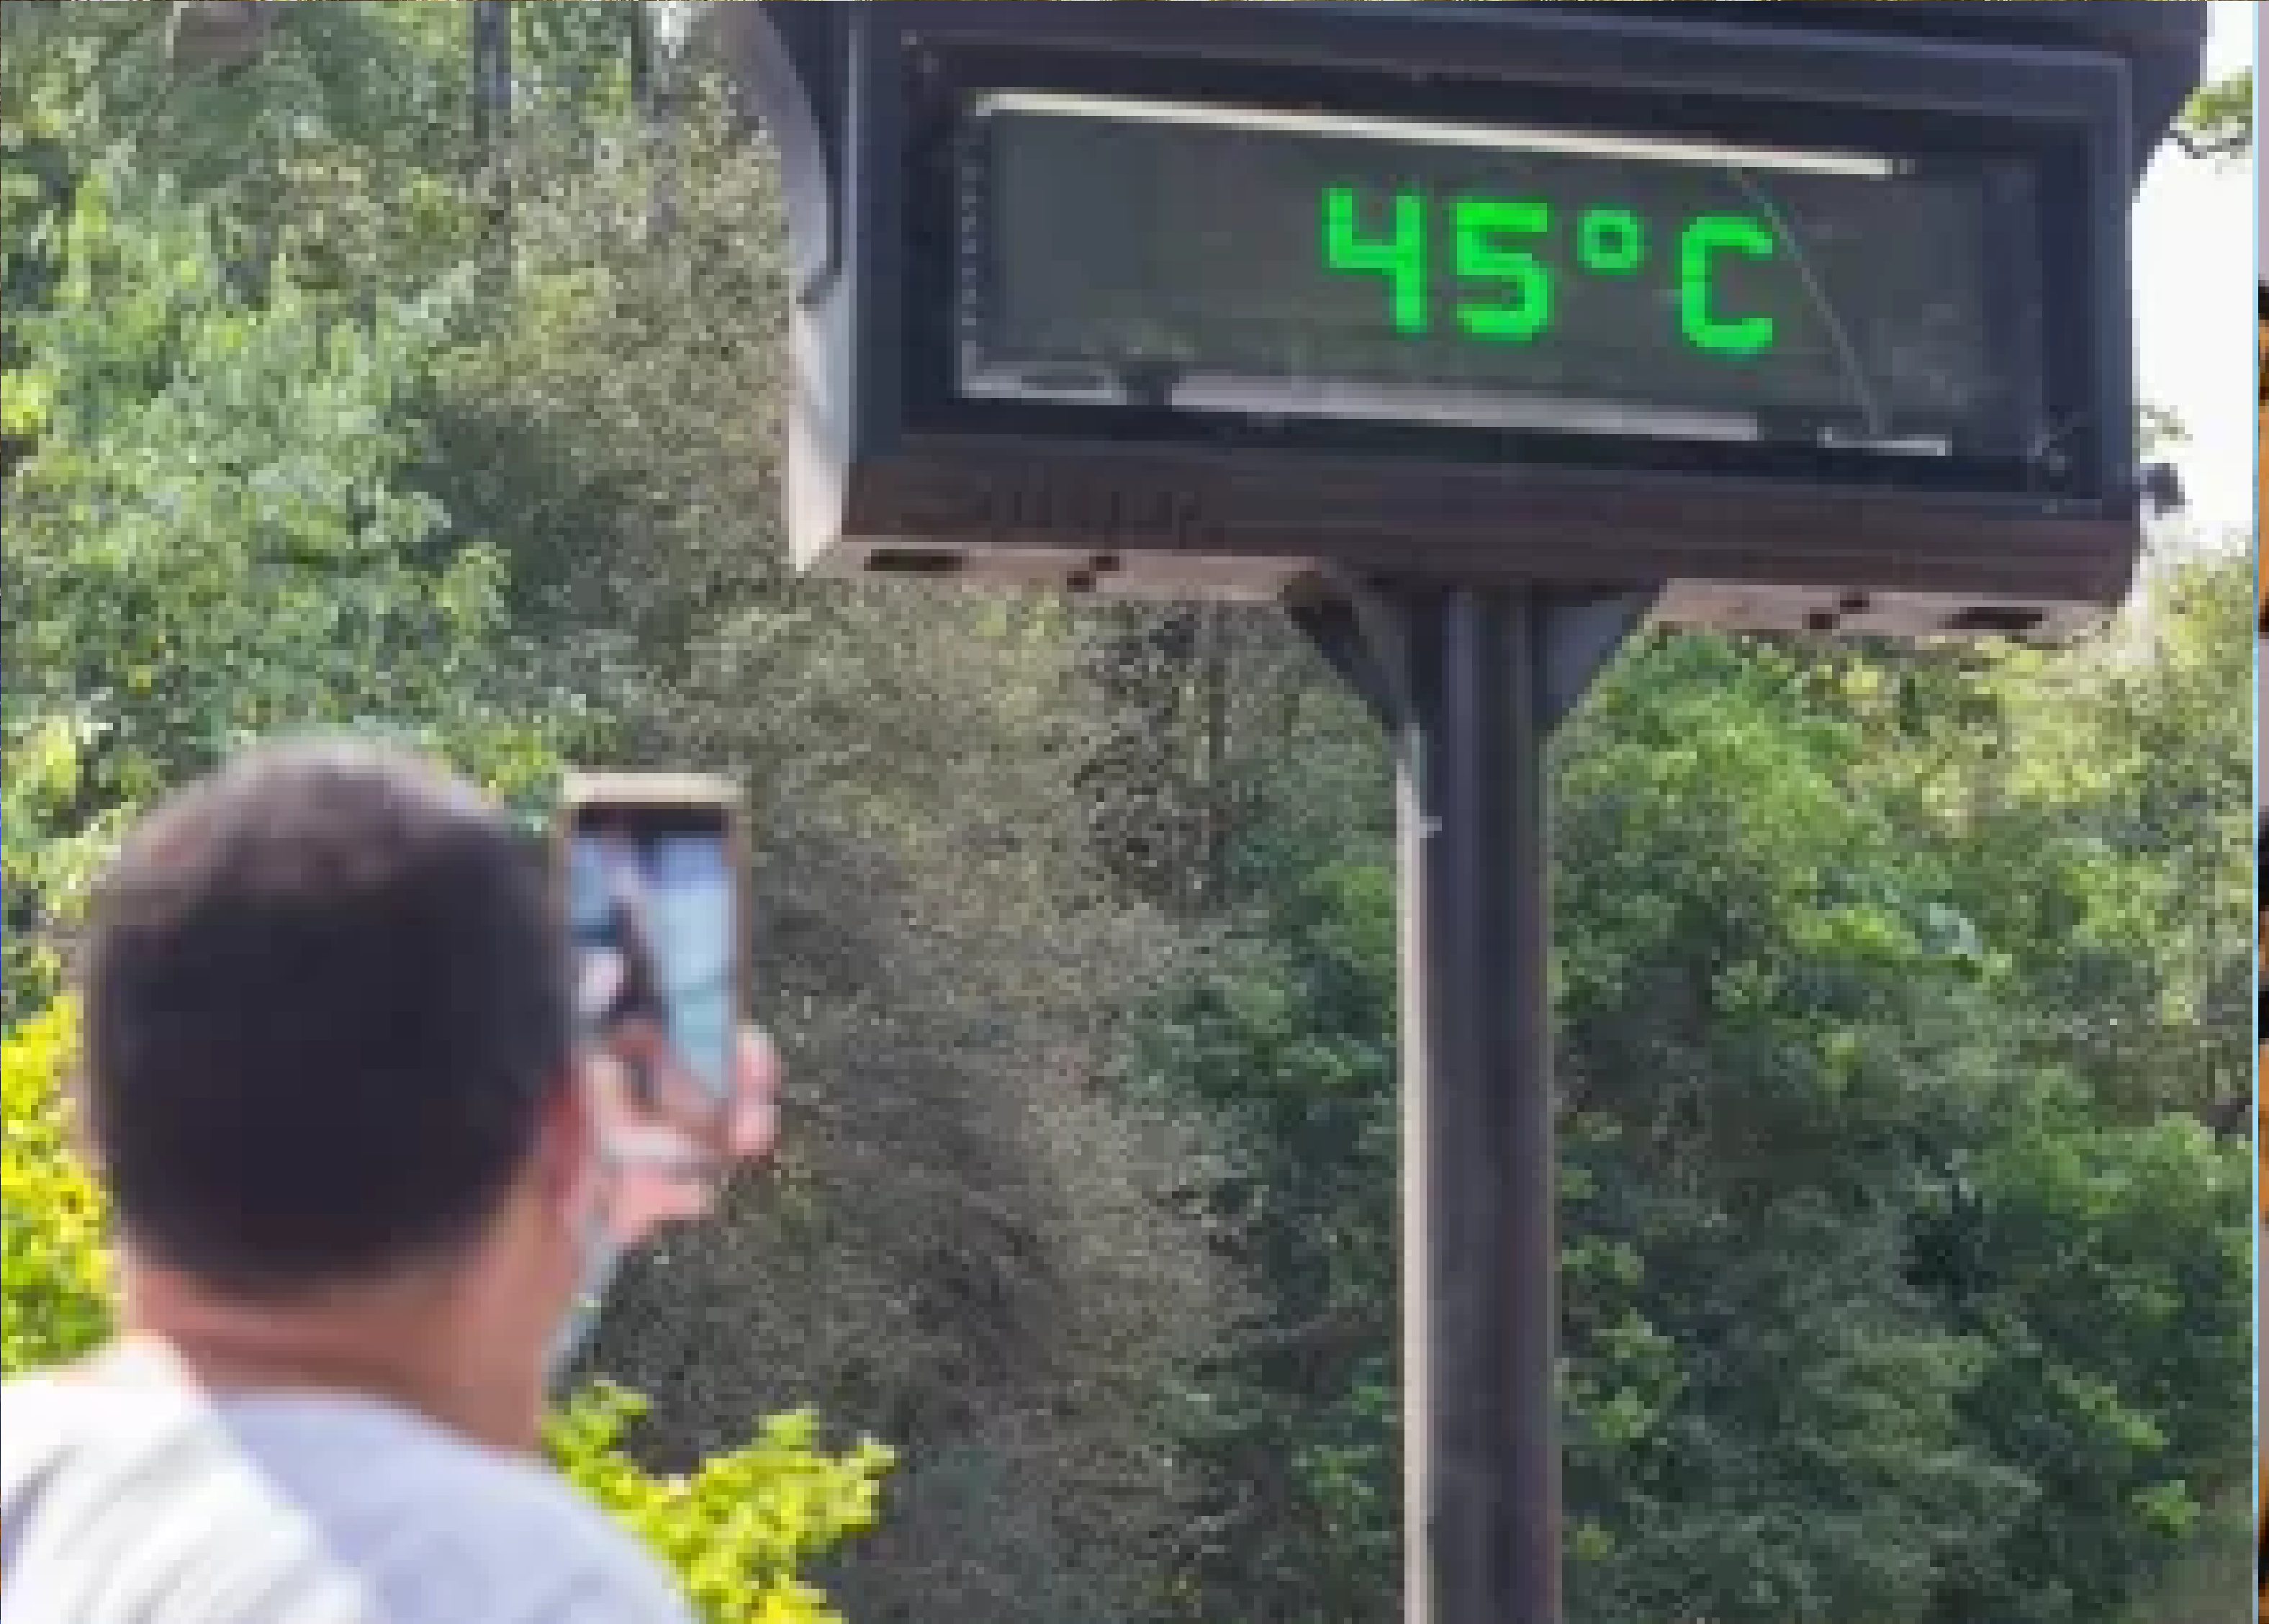 Rio de Janeiro e outras capitais podem ter recorde de calor nesta